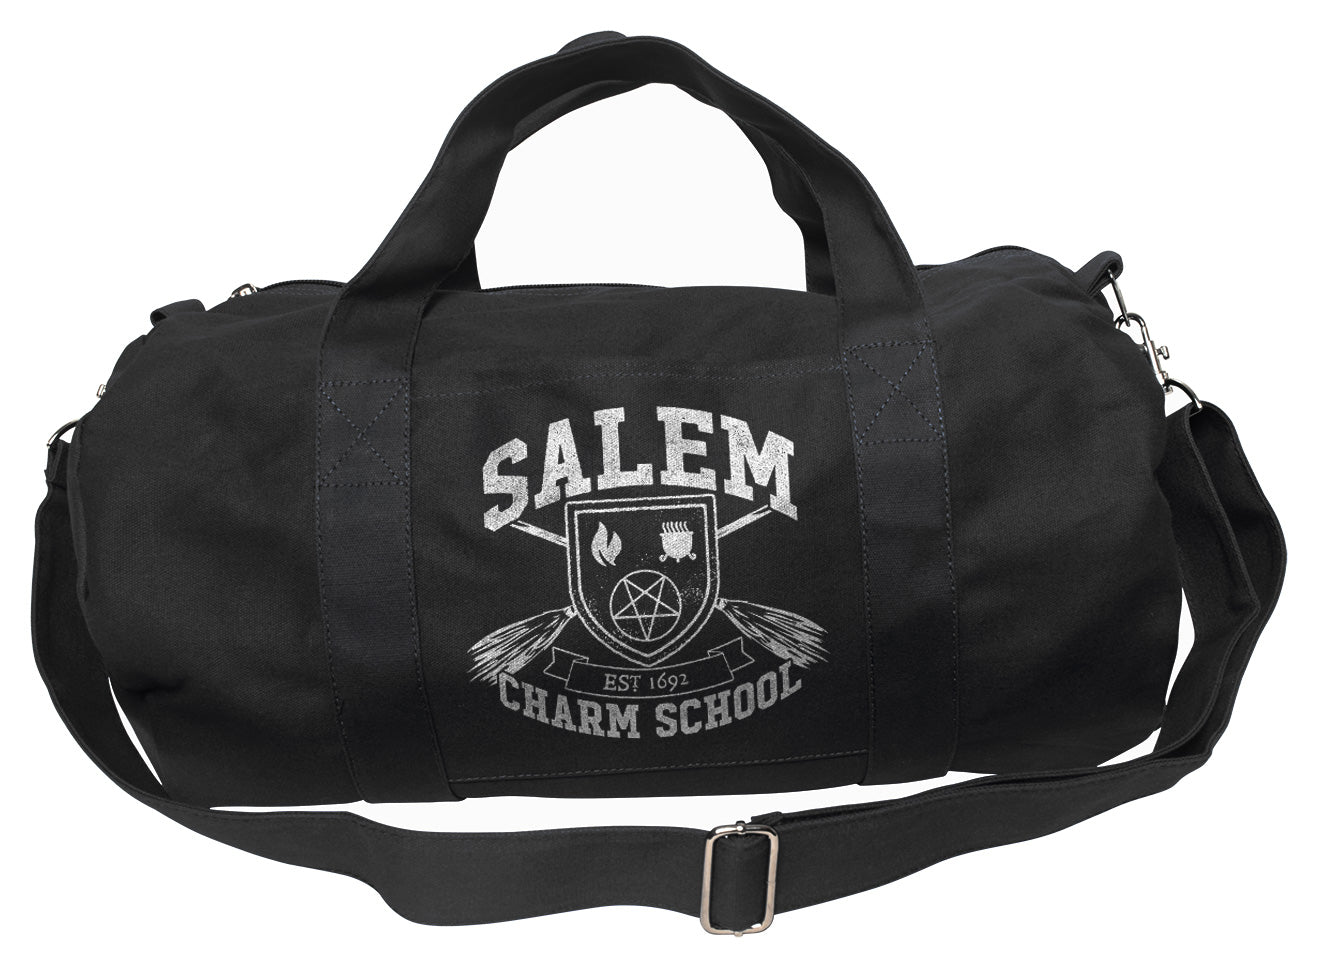 Salem Charm School Duffel Bag